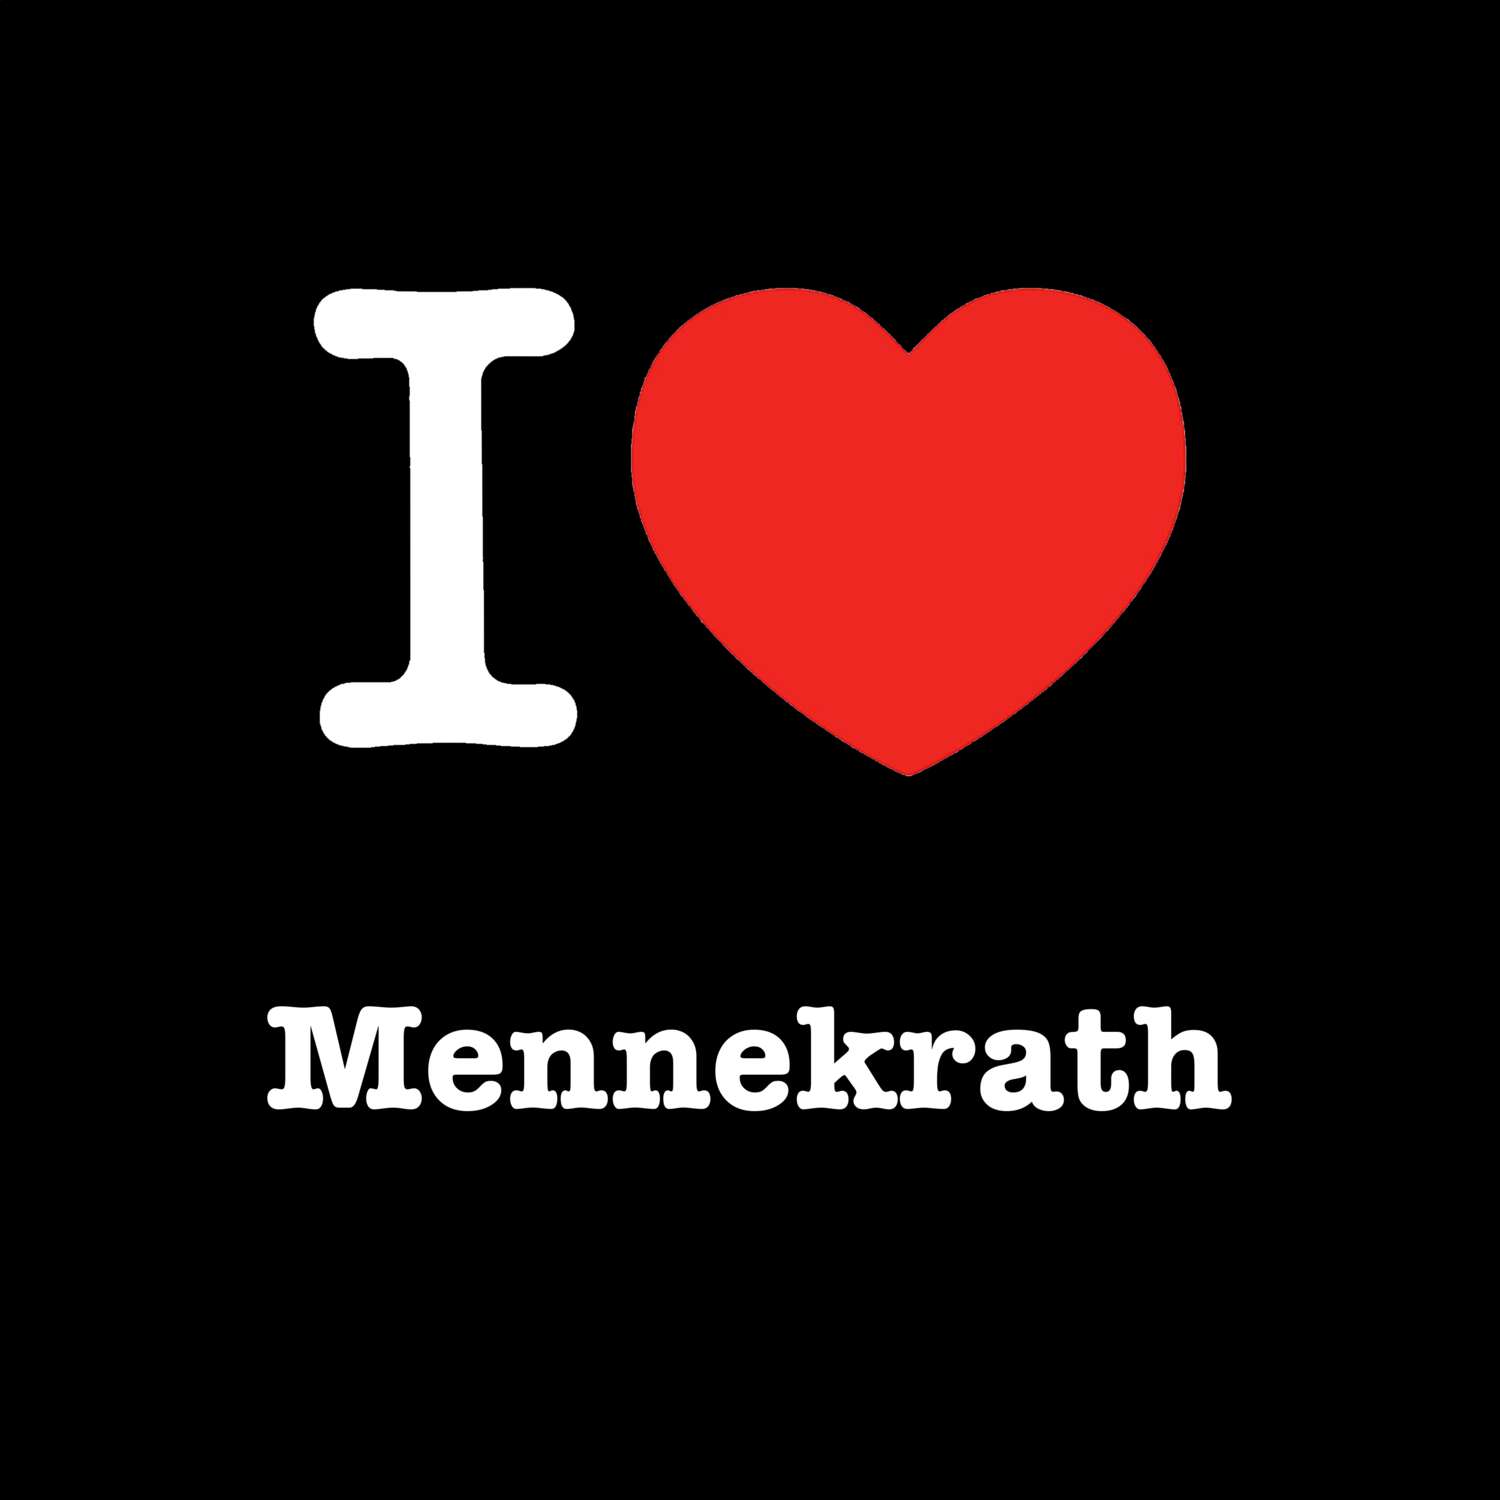 Mennekrath T-Shirt »I love«